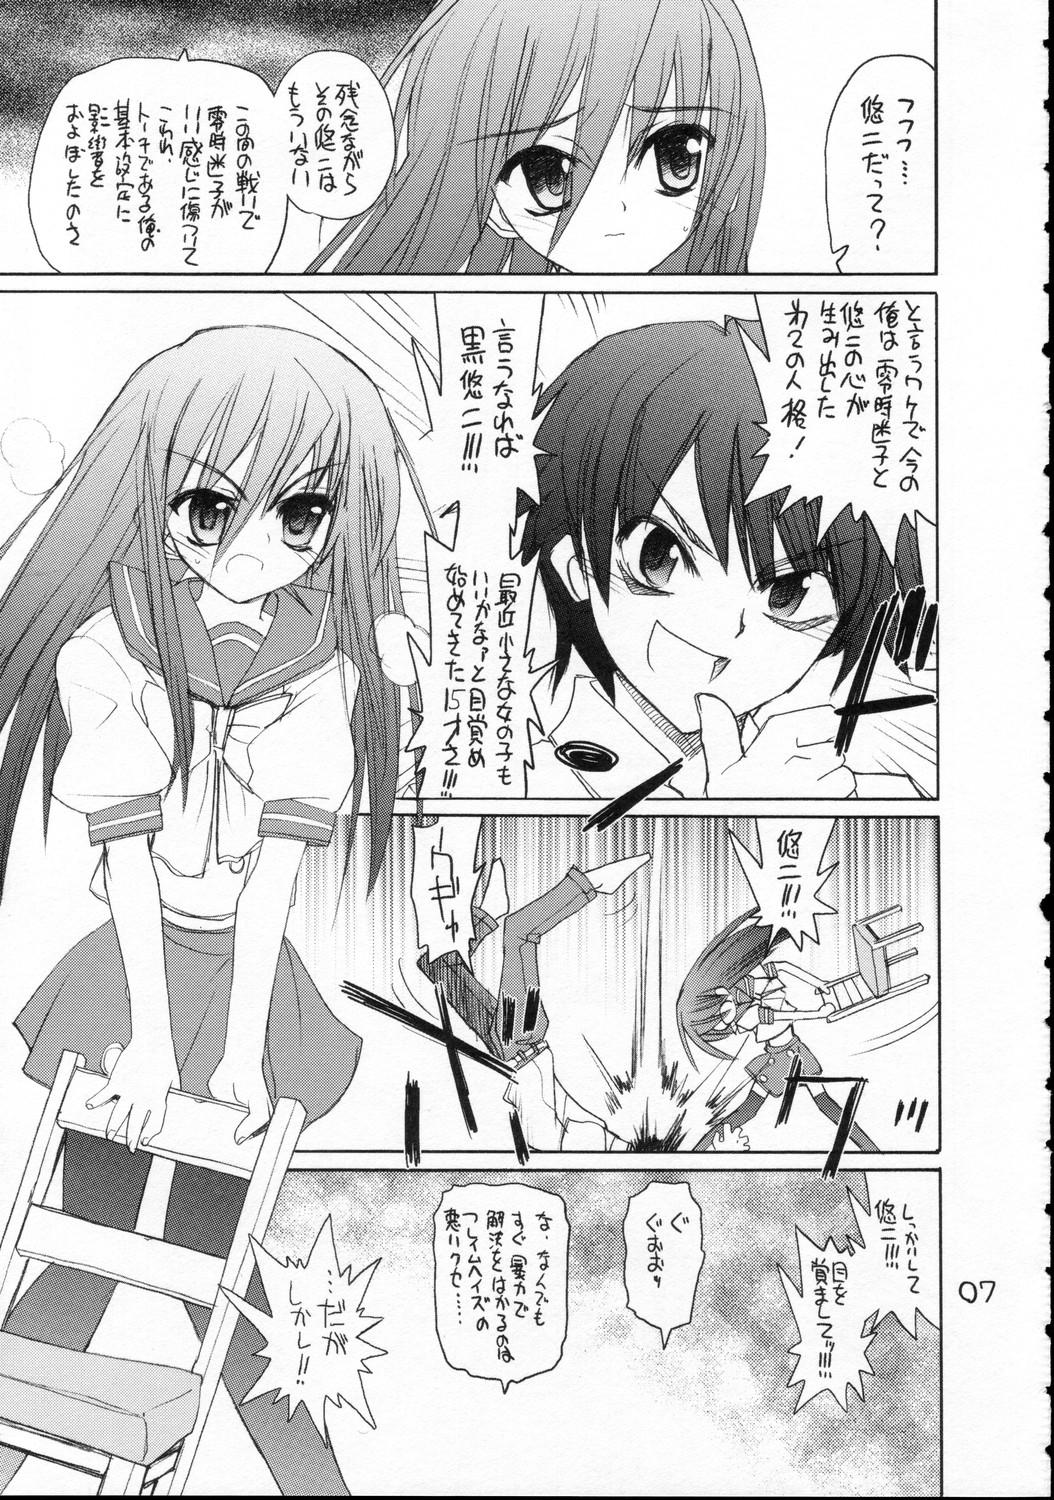 Hot Naked Girl Urusai - annoying annoying annoying - Shakugan no shana Hot Cunt - Page 6